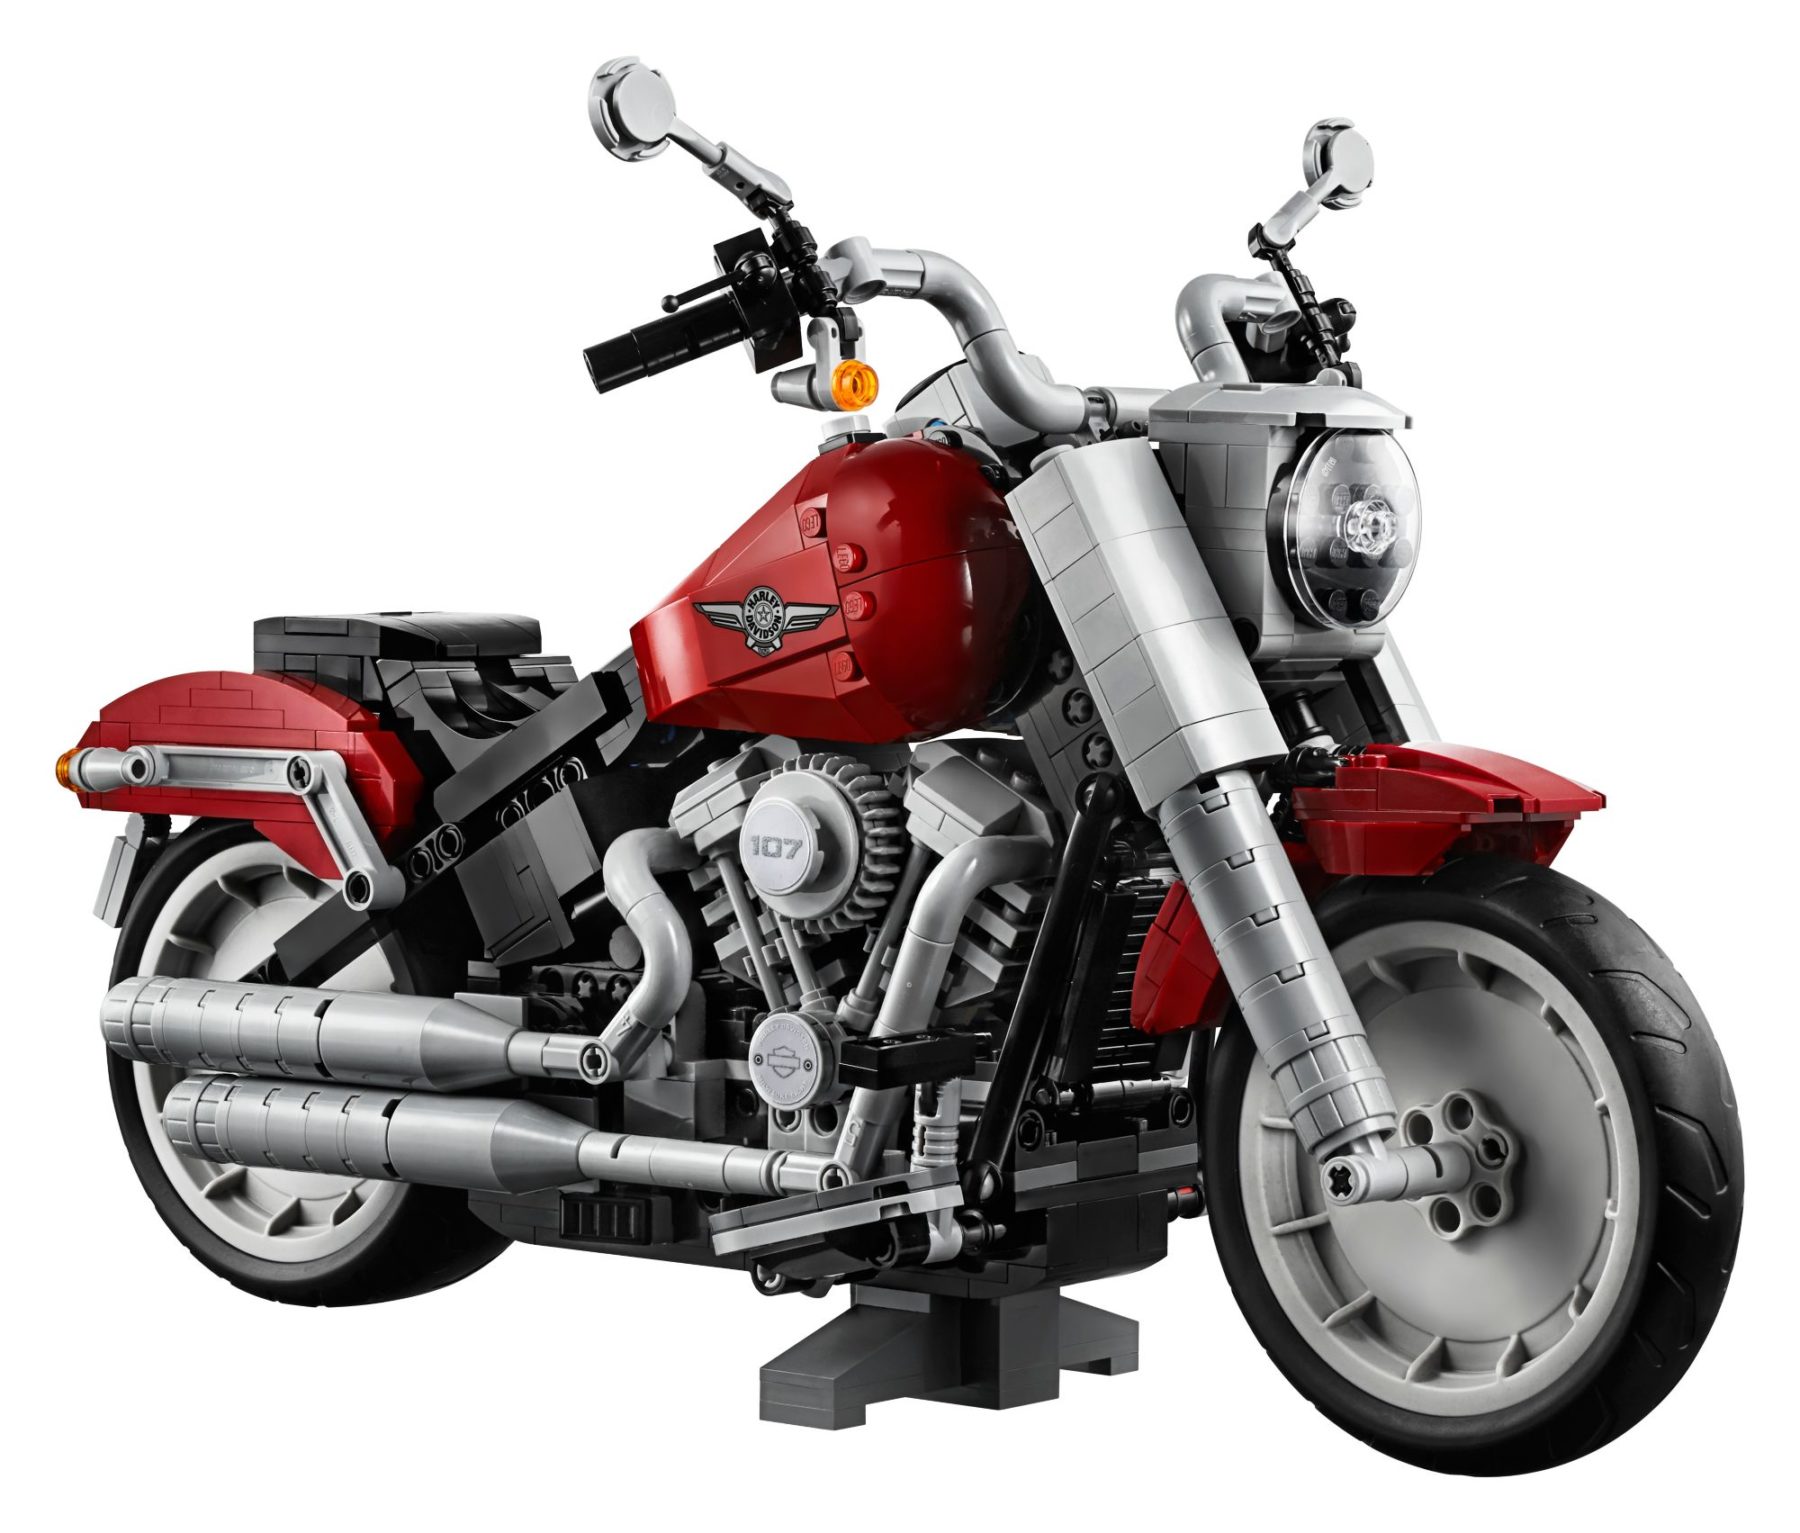 LEGO Creator Expert 10269 Harley-Davidson Fat Boy